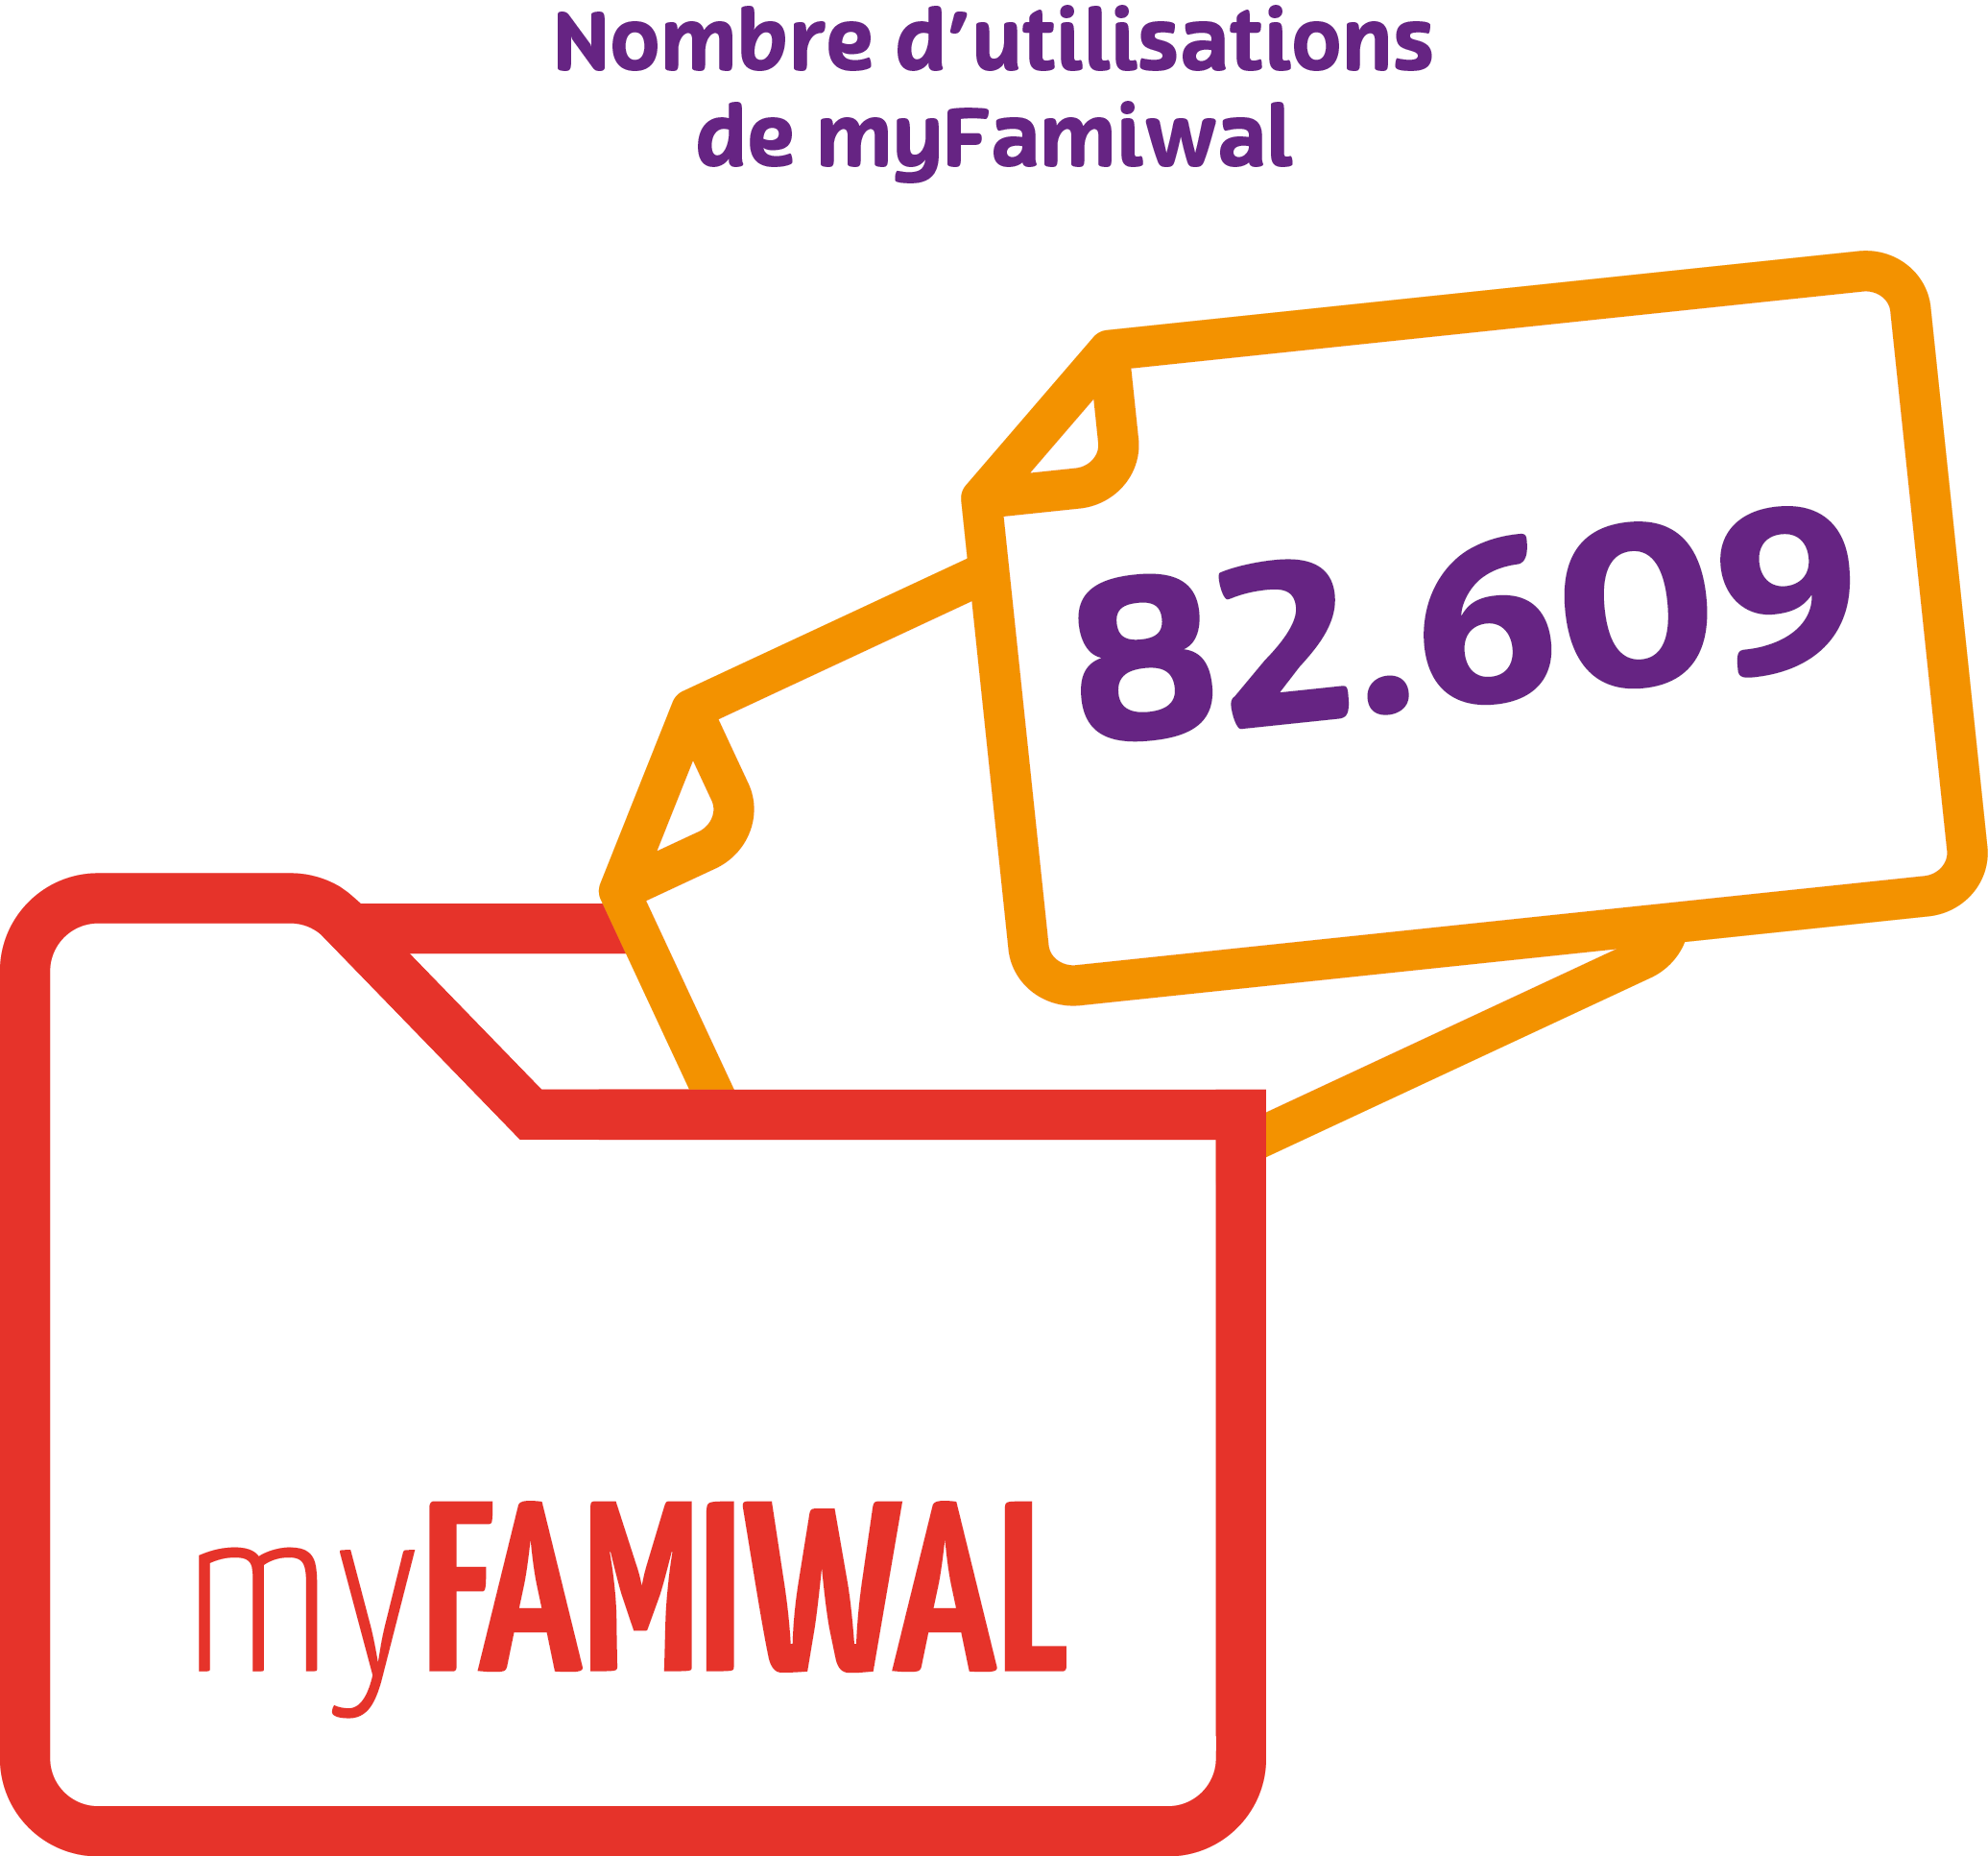 Nombre d'utilisations myfamiwal